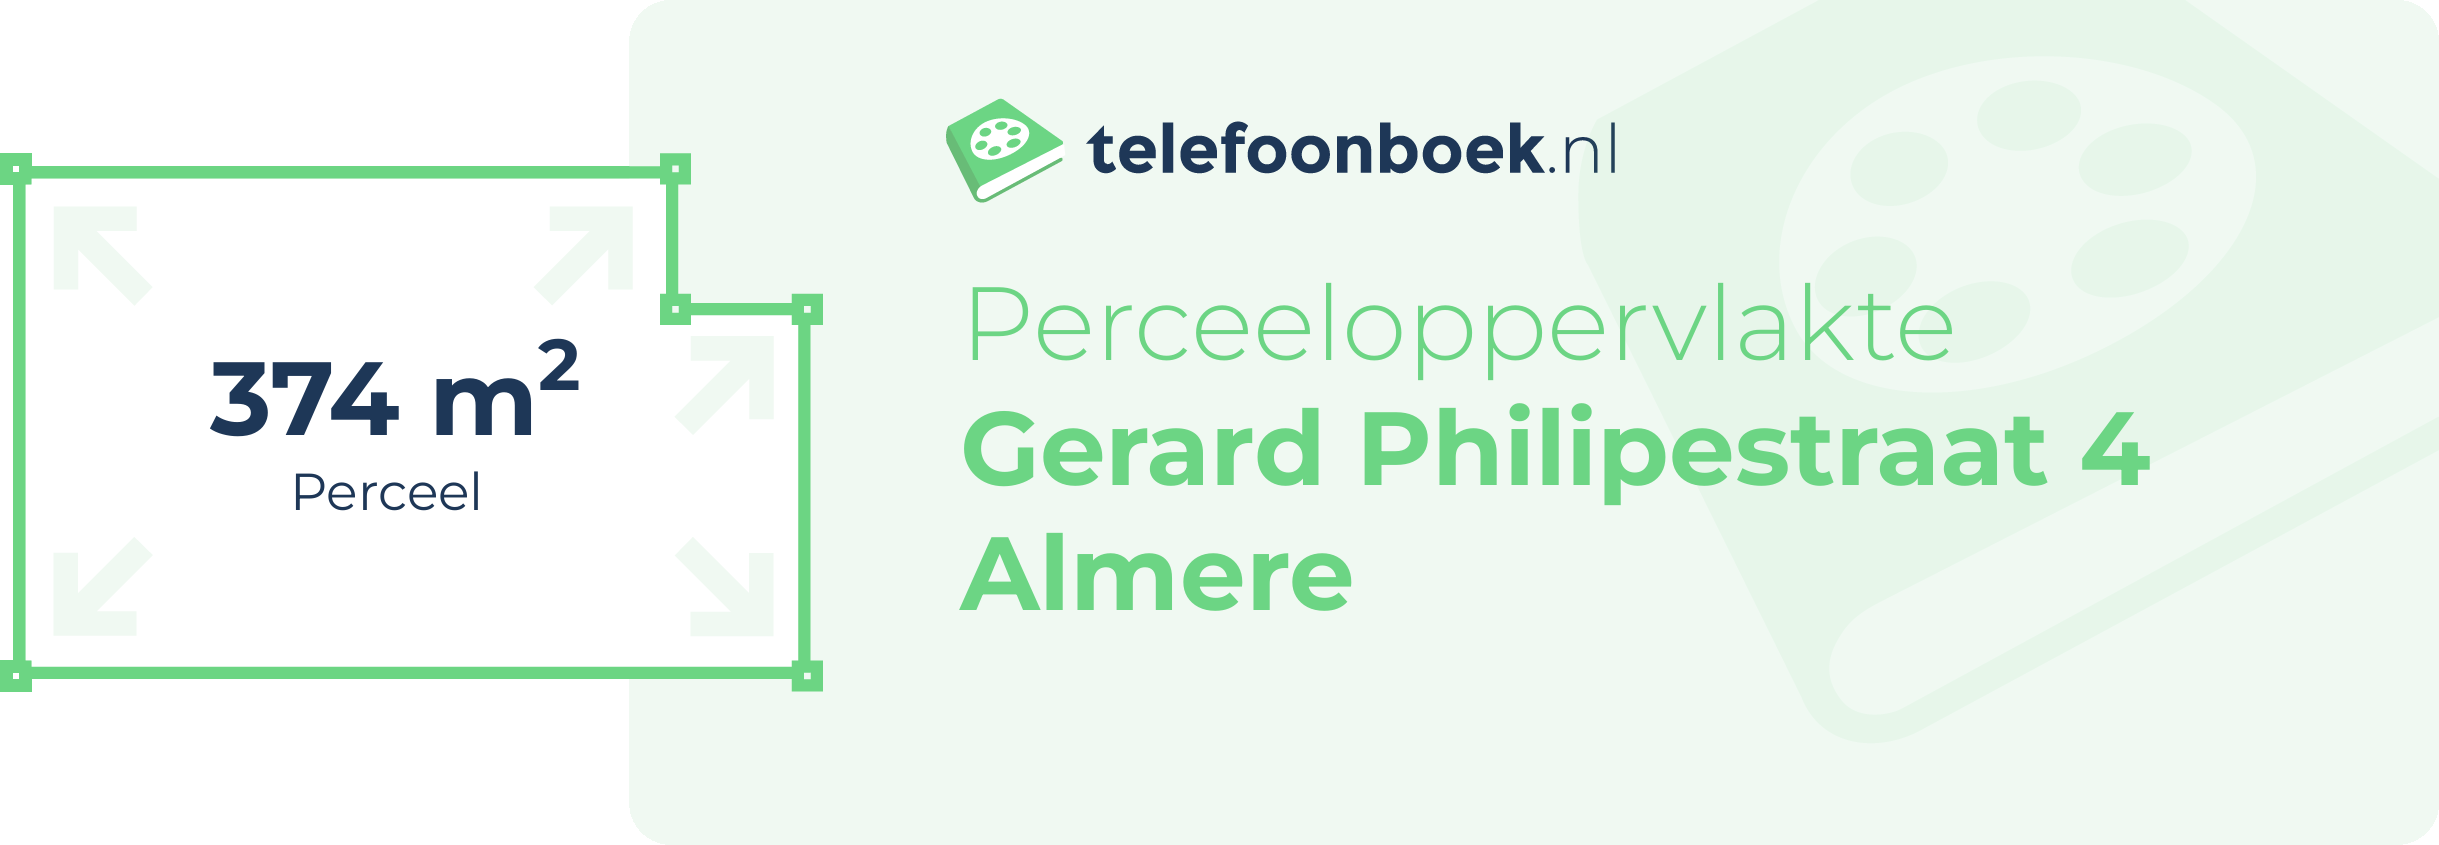 Perceeloppervlakte Gerard Philipestraat 4 Almere